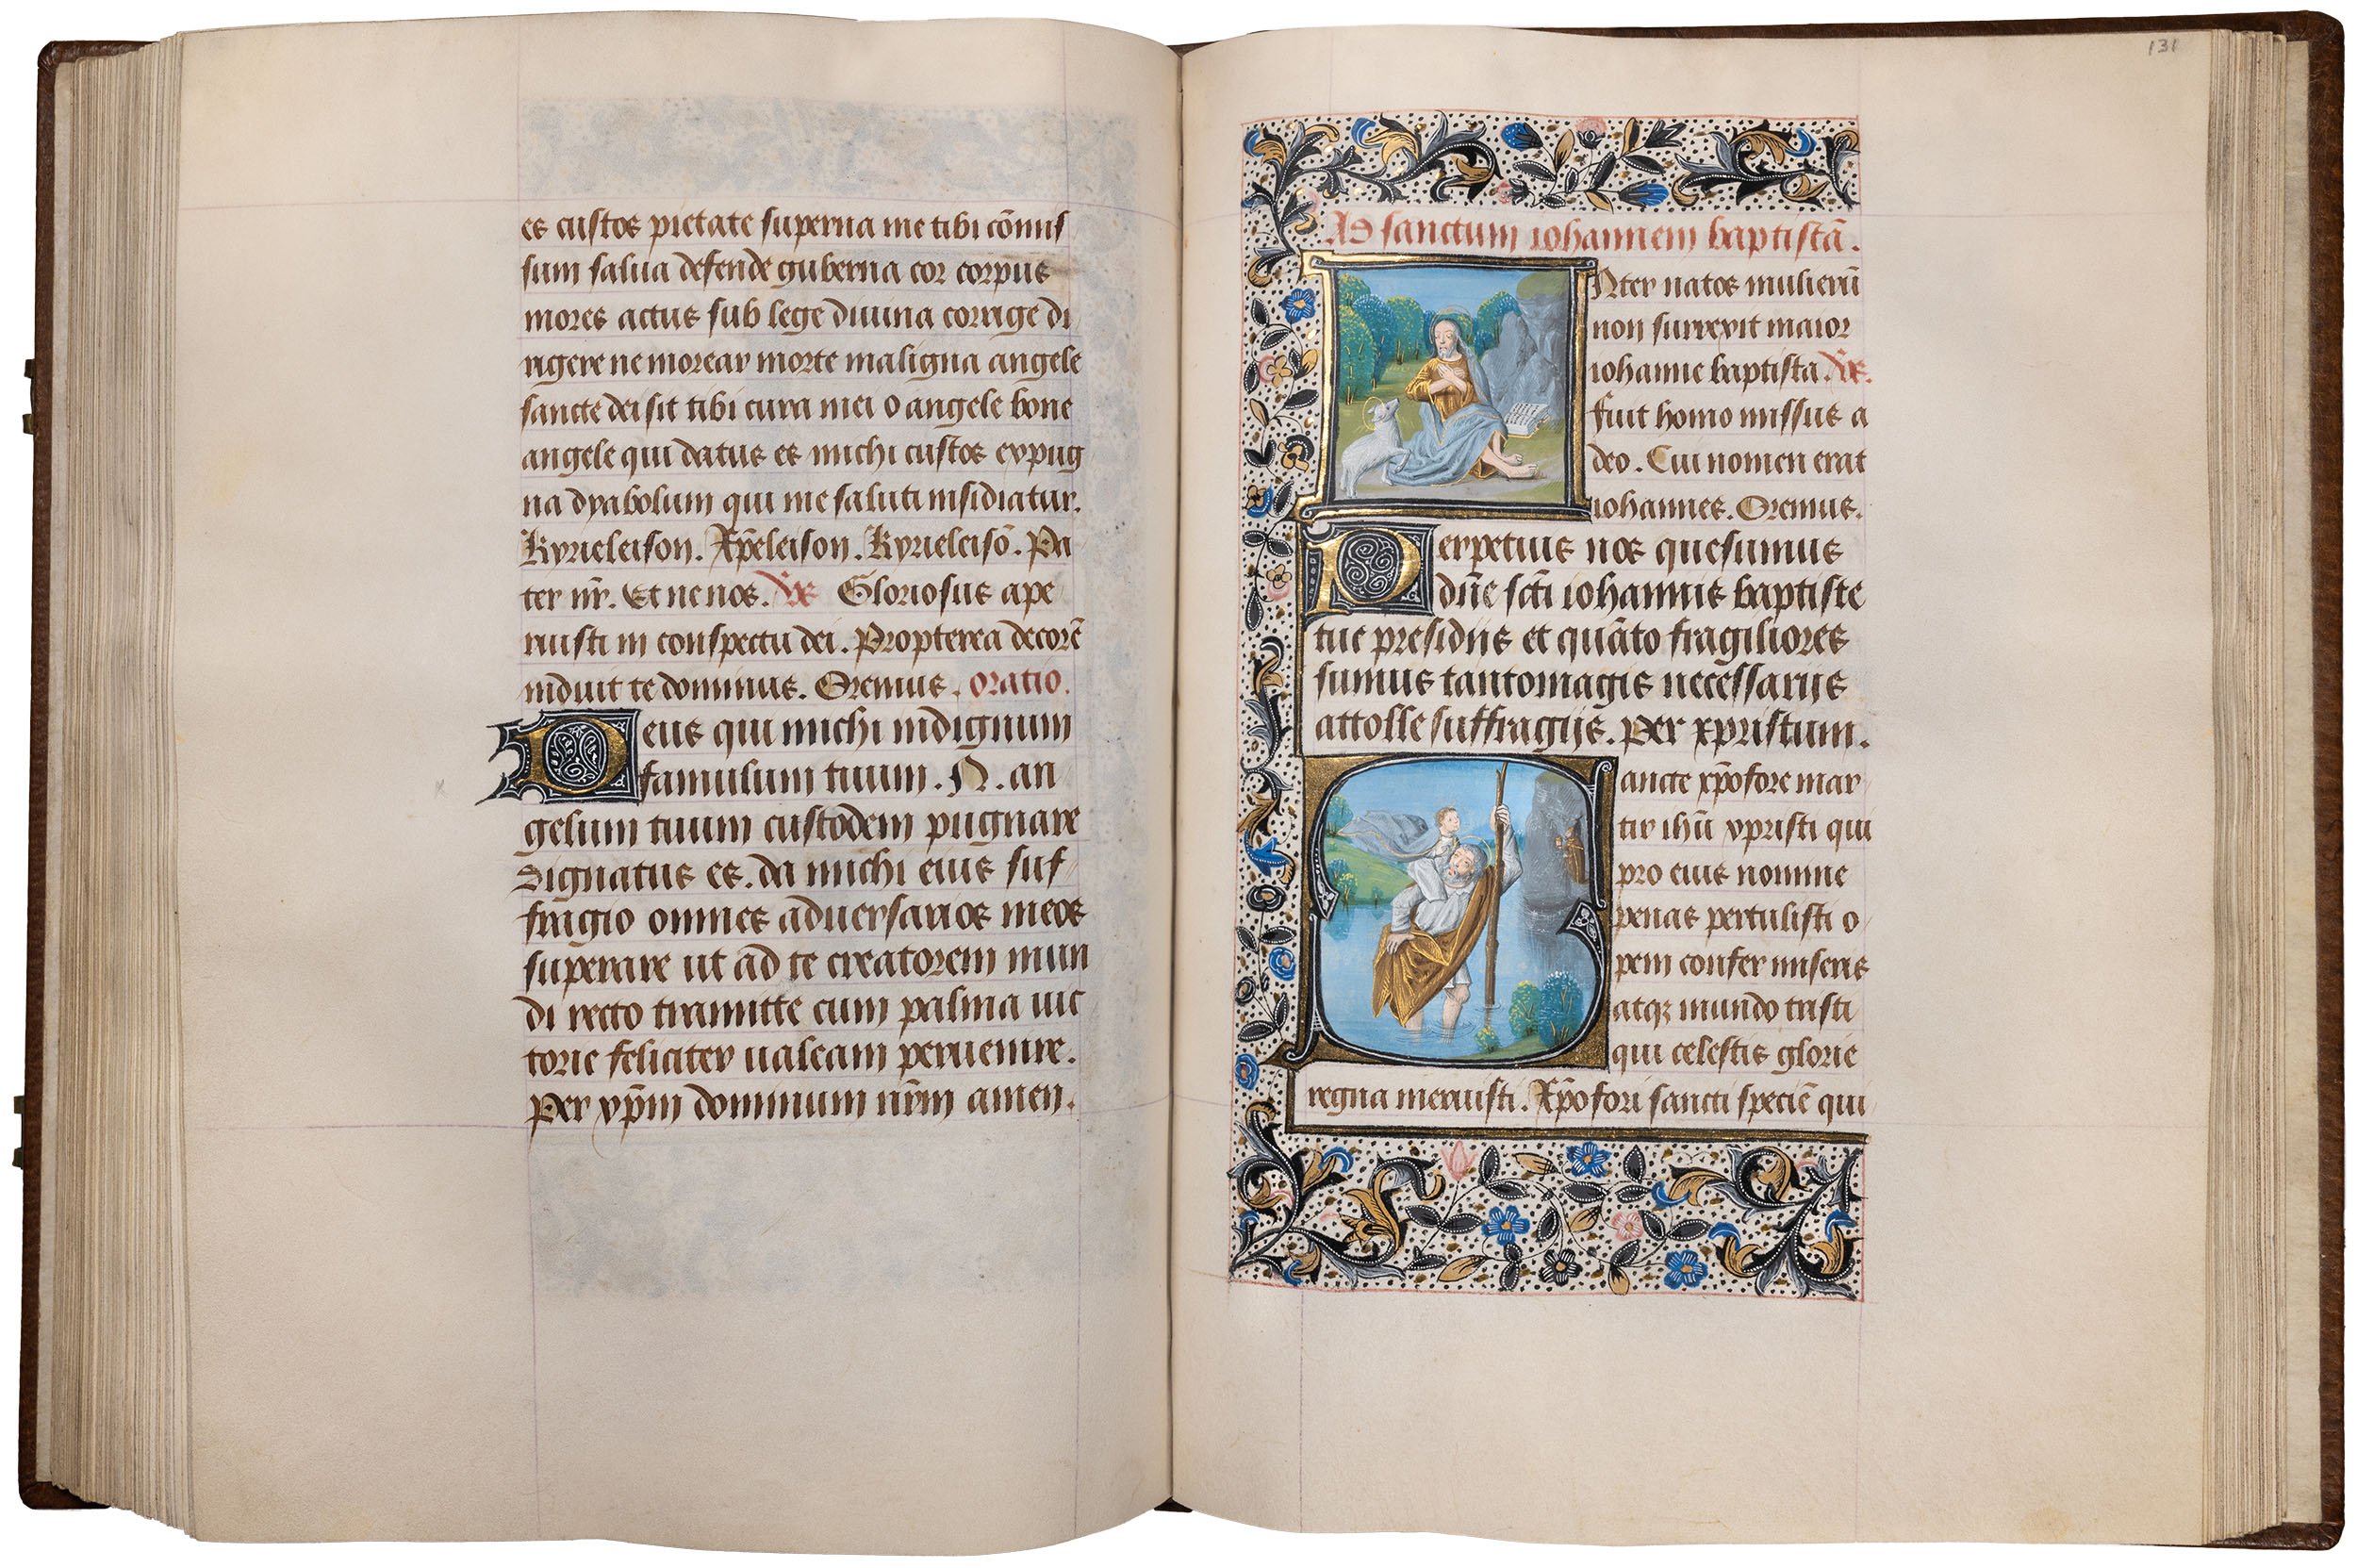 Book-of-hours-claude-toulongeon-grisaille-order-golden-fleece-bruges-edward-iv-folio-34.jpg